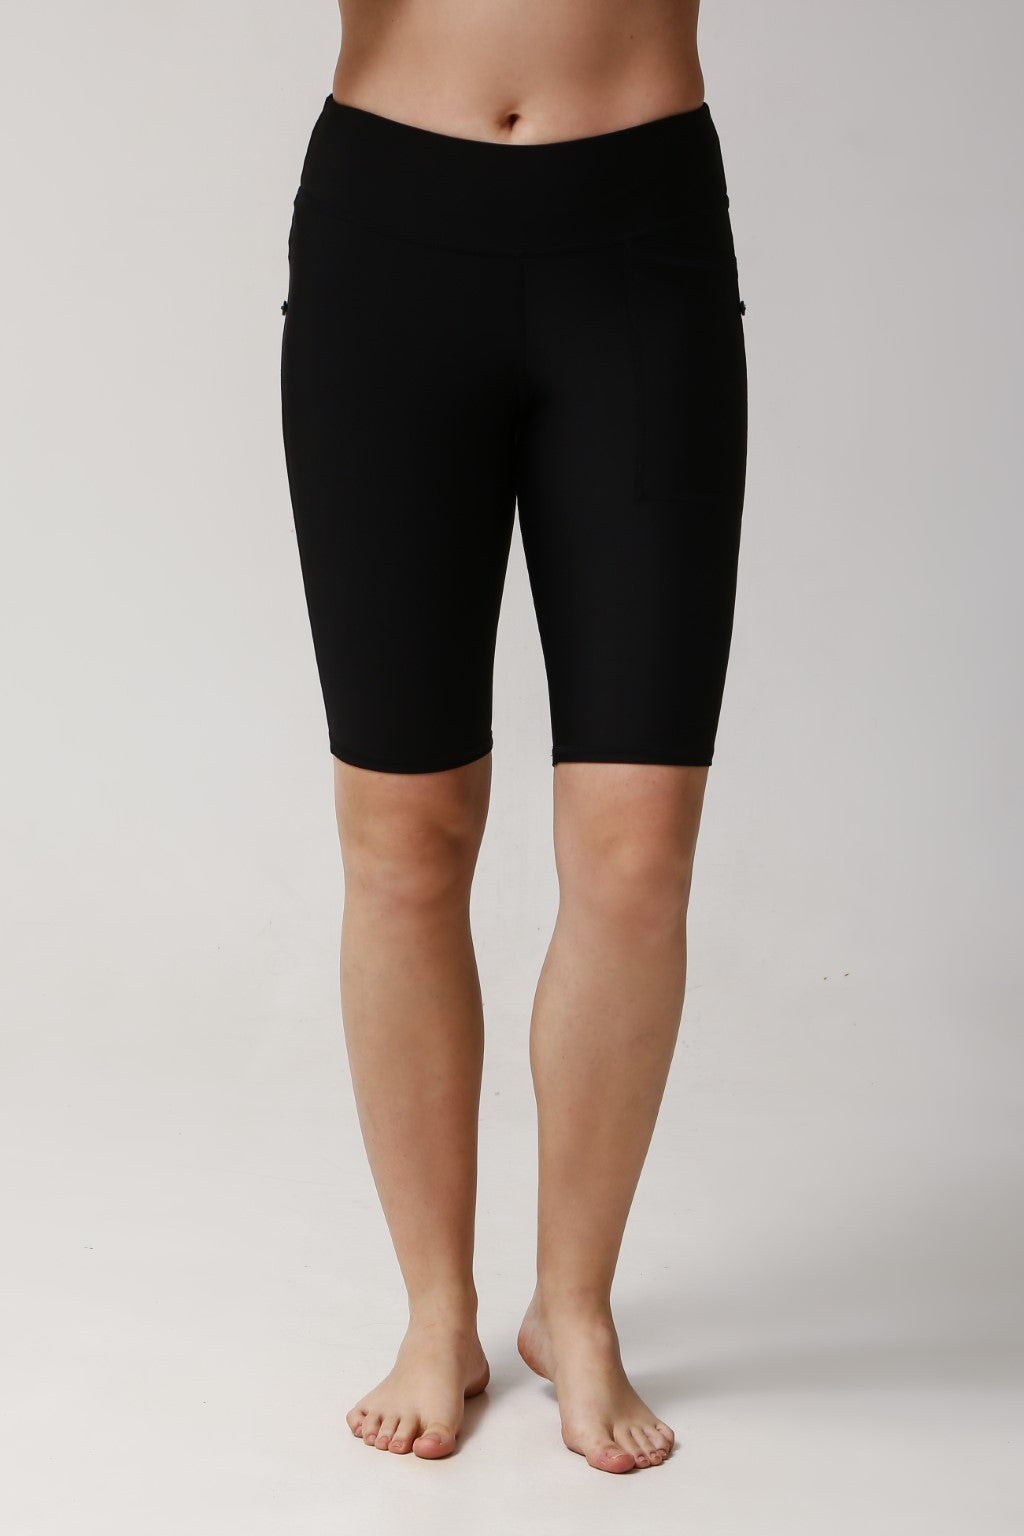 Lanuuk Swim Shorts - Black | Mid Coverage Board Swimming Leggings Modest Swimwear Burkini